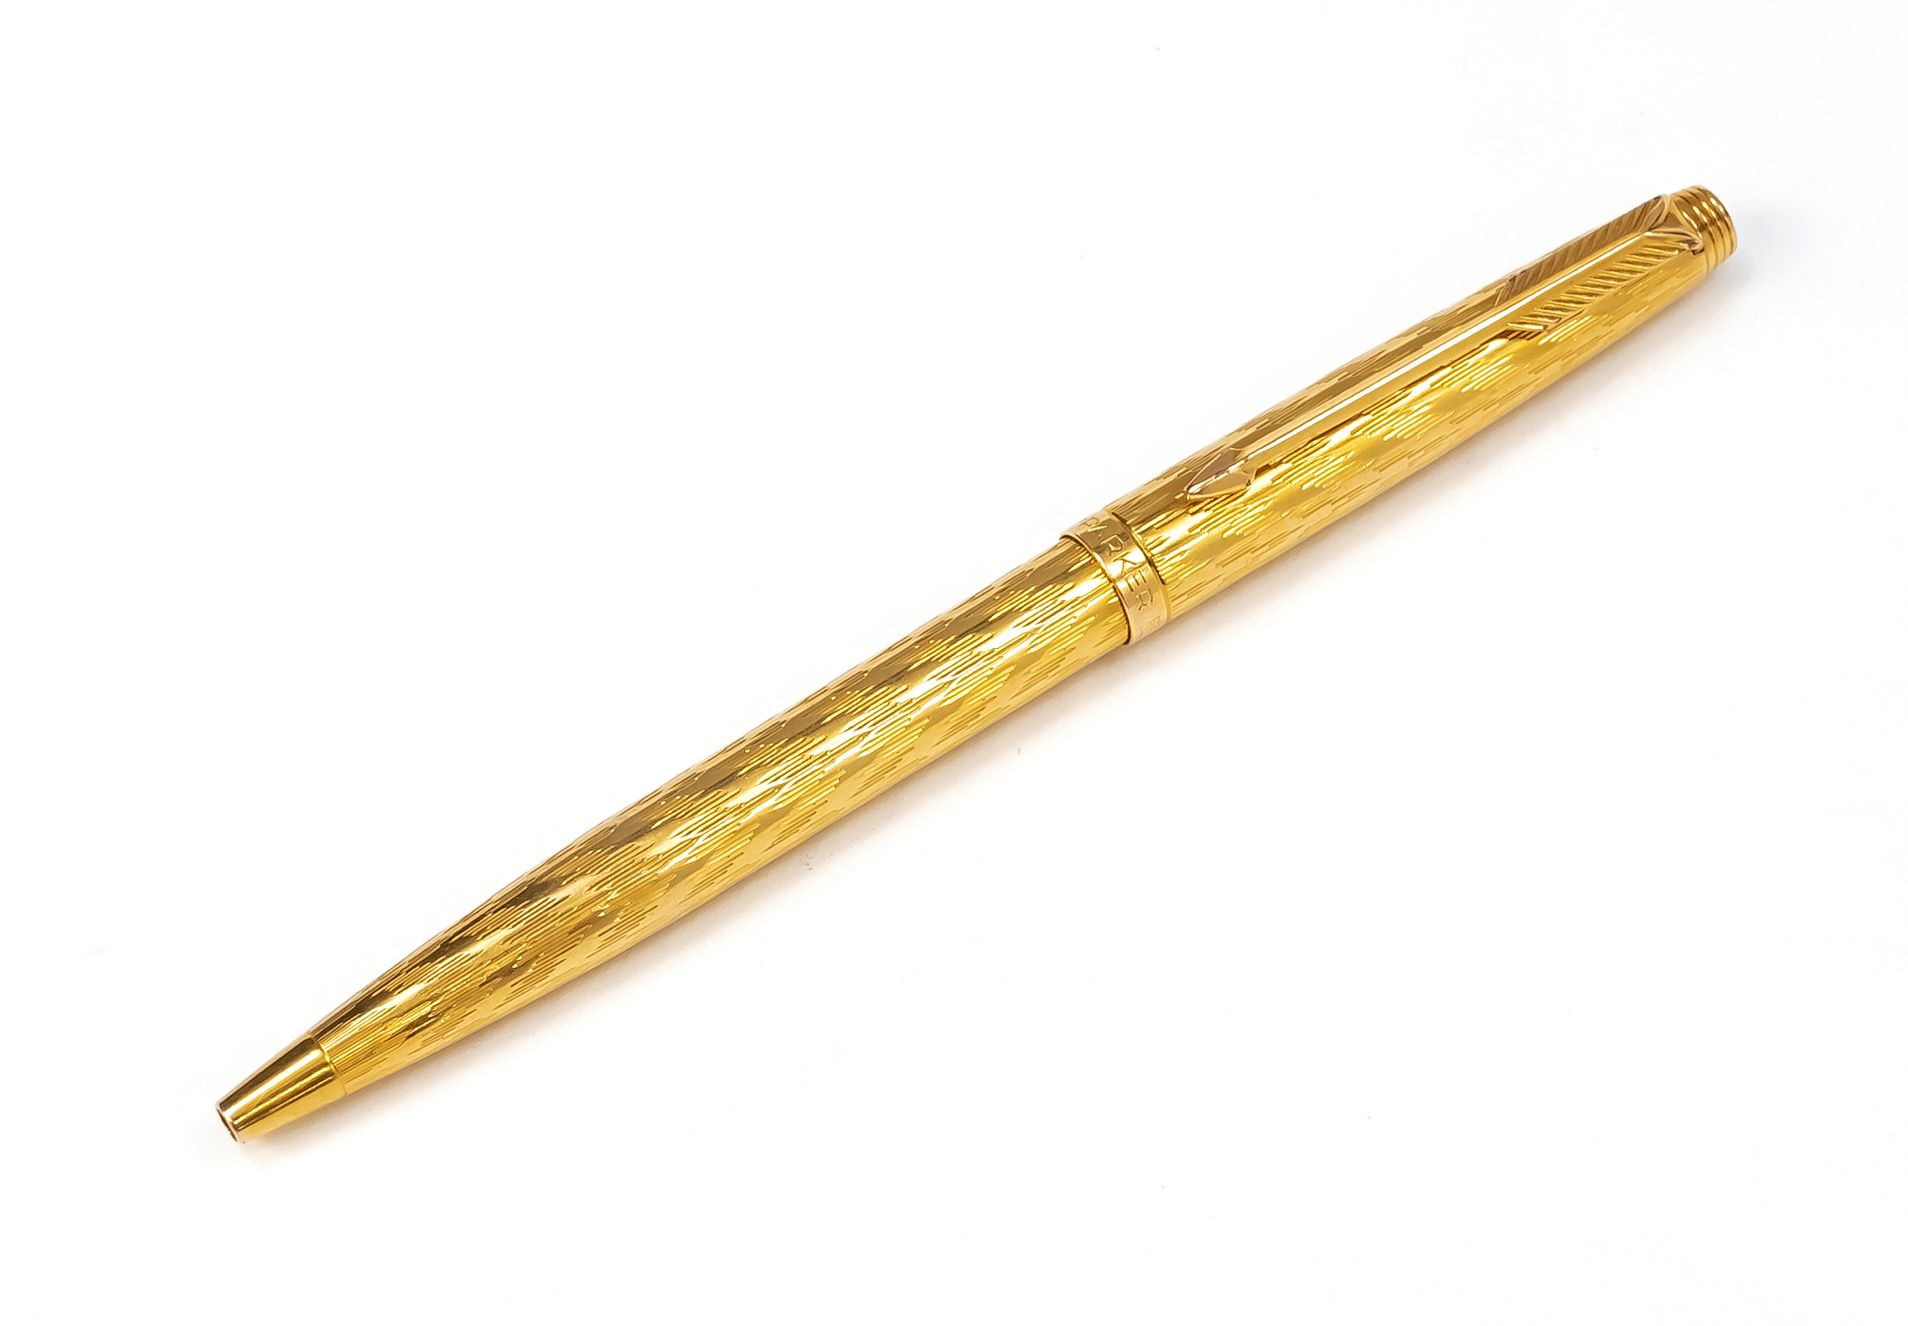 Null 帕克双头针，20世纪下半叶，法国制造，镀金外壳，有雕刻的装饰，长12.8厘米